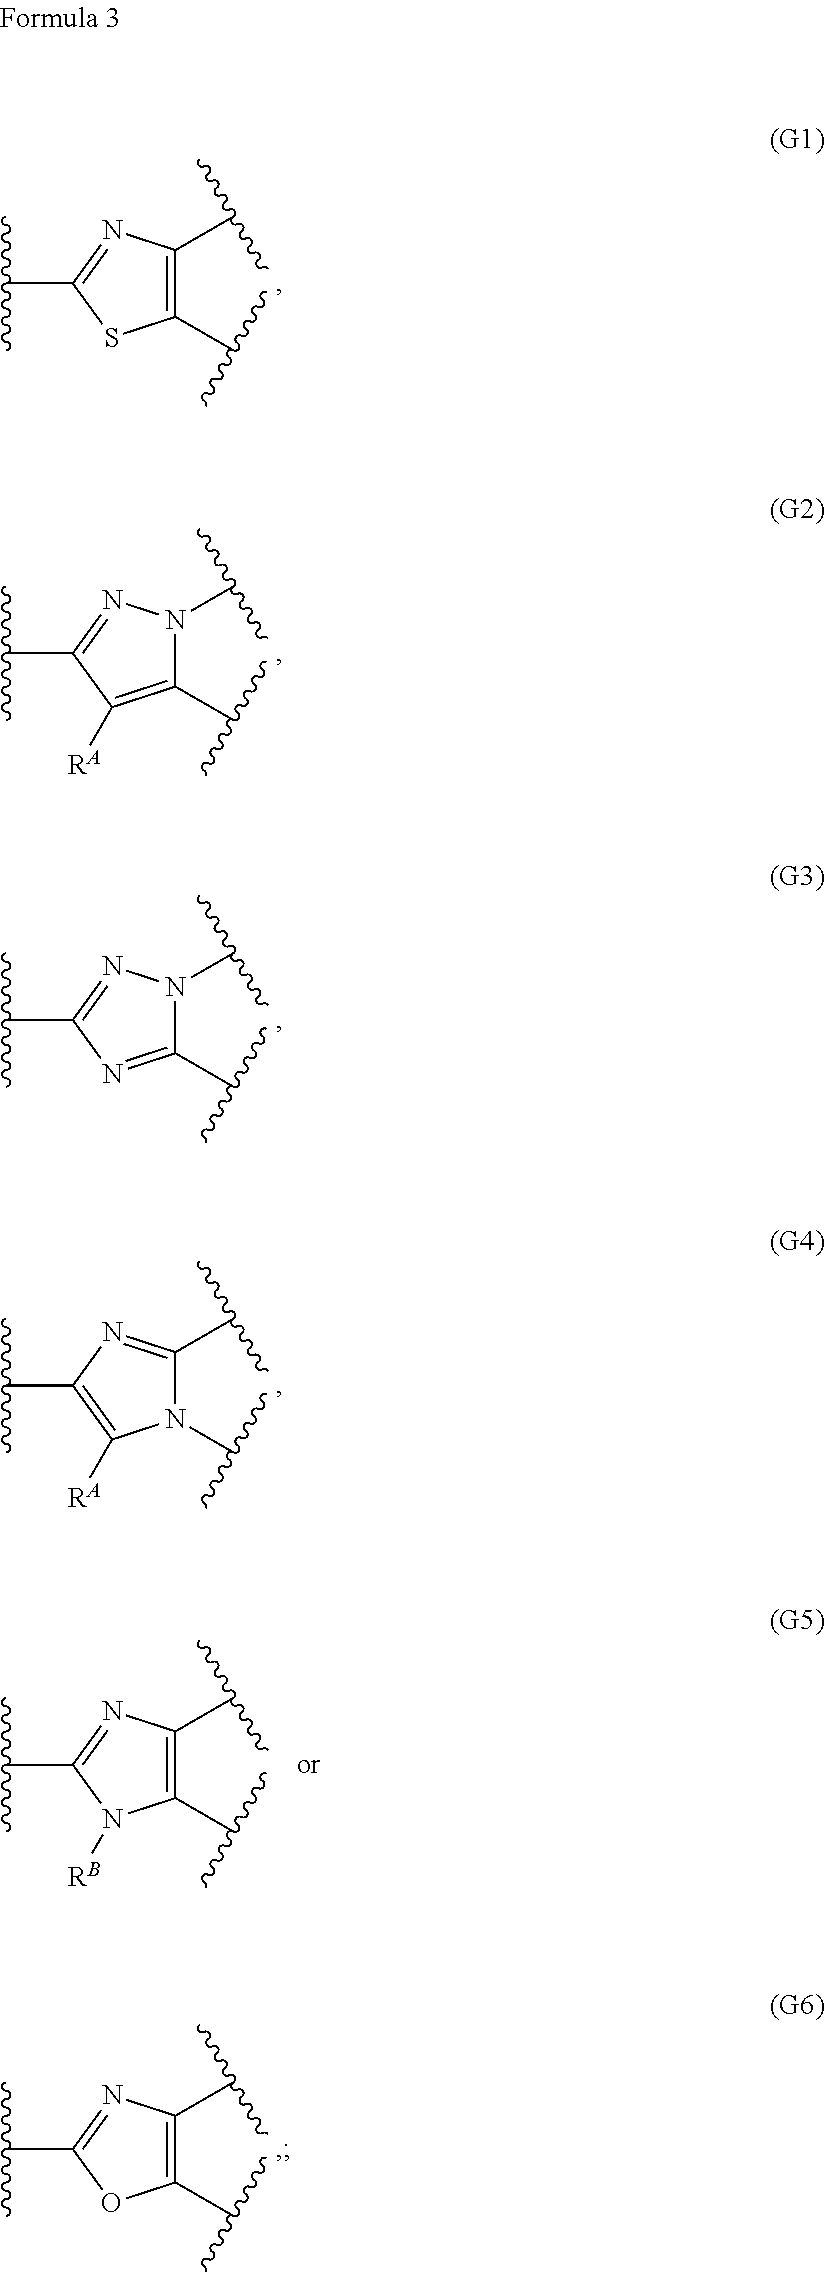 Ring-fused azole derivative having pi3k-inhibiting activity